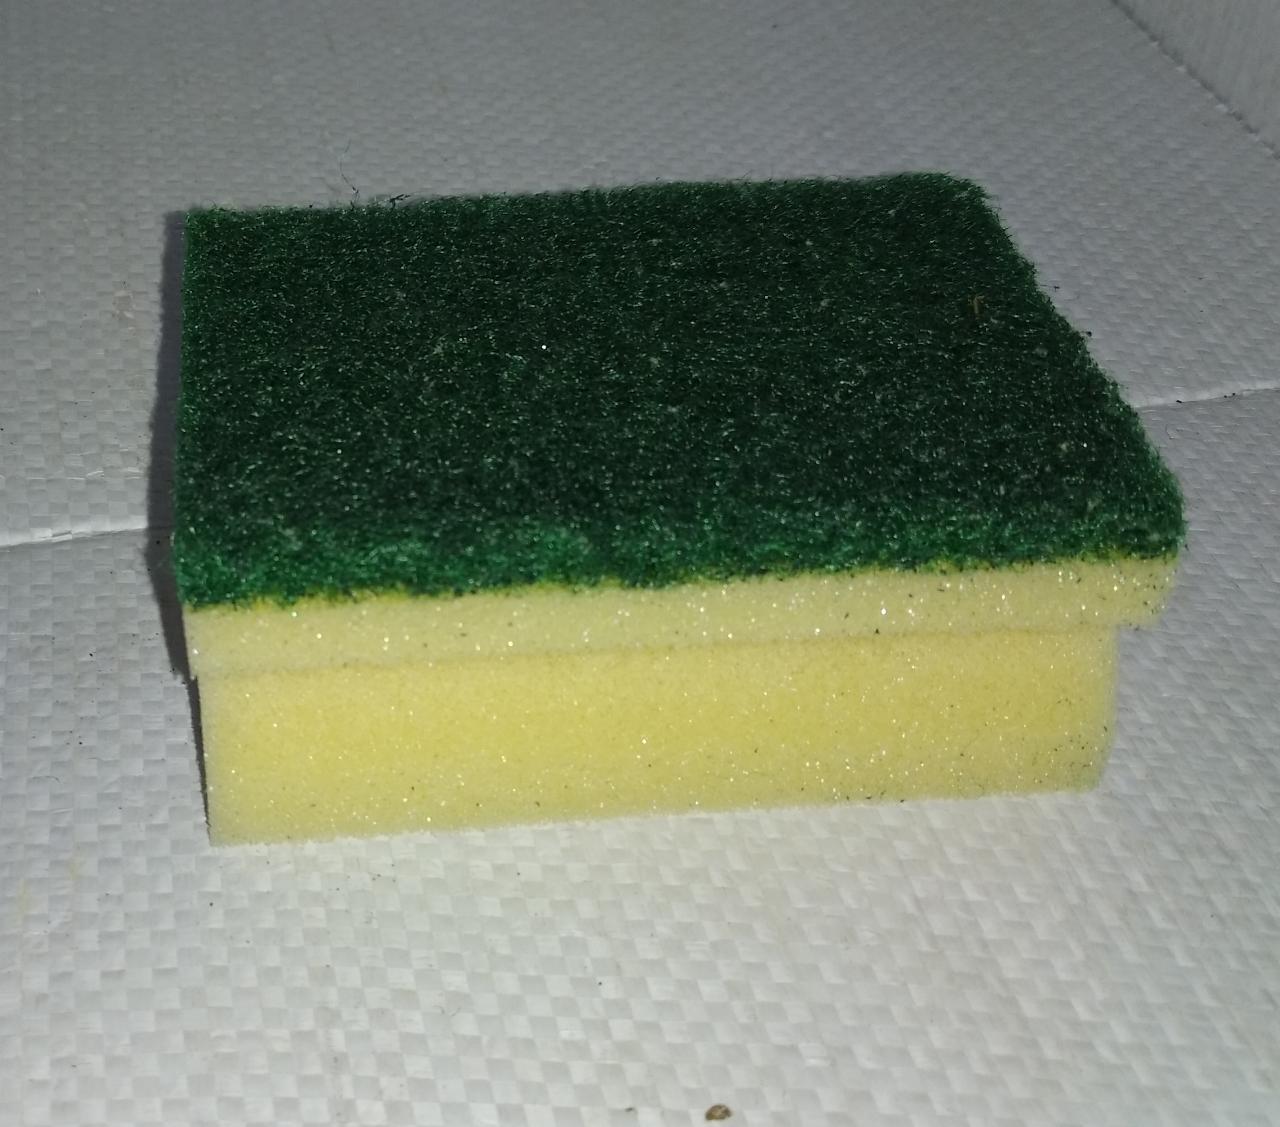 1421 Scrub Sponge 2 in 1 Pad for Kitchen, Sink, Bathroom Cleaning Scrubber DeoDap